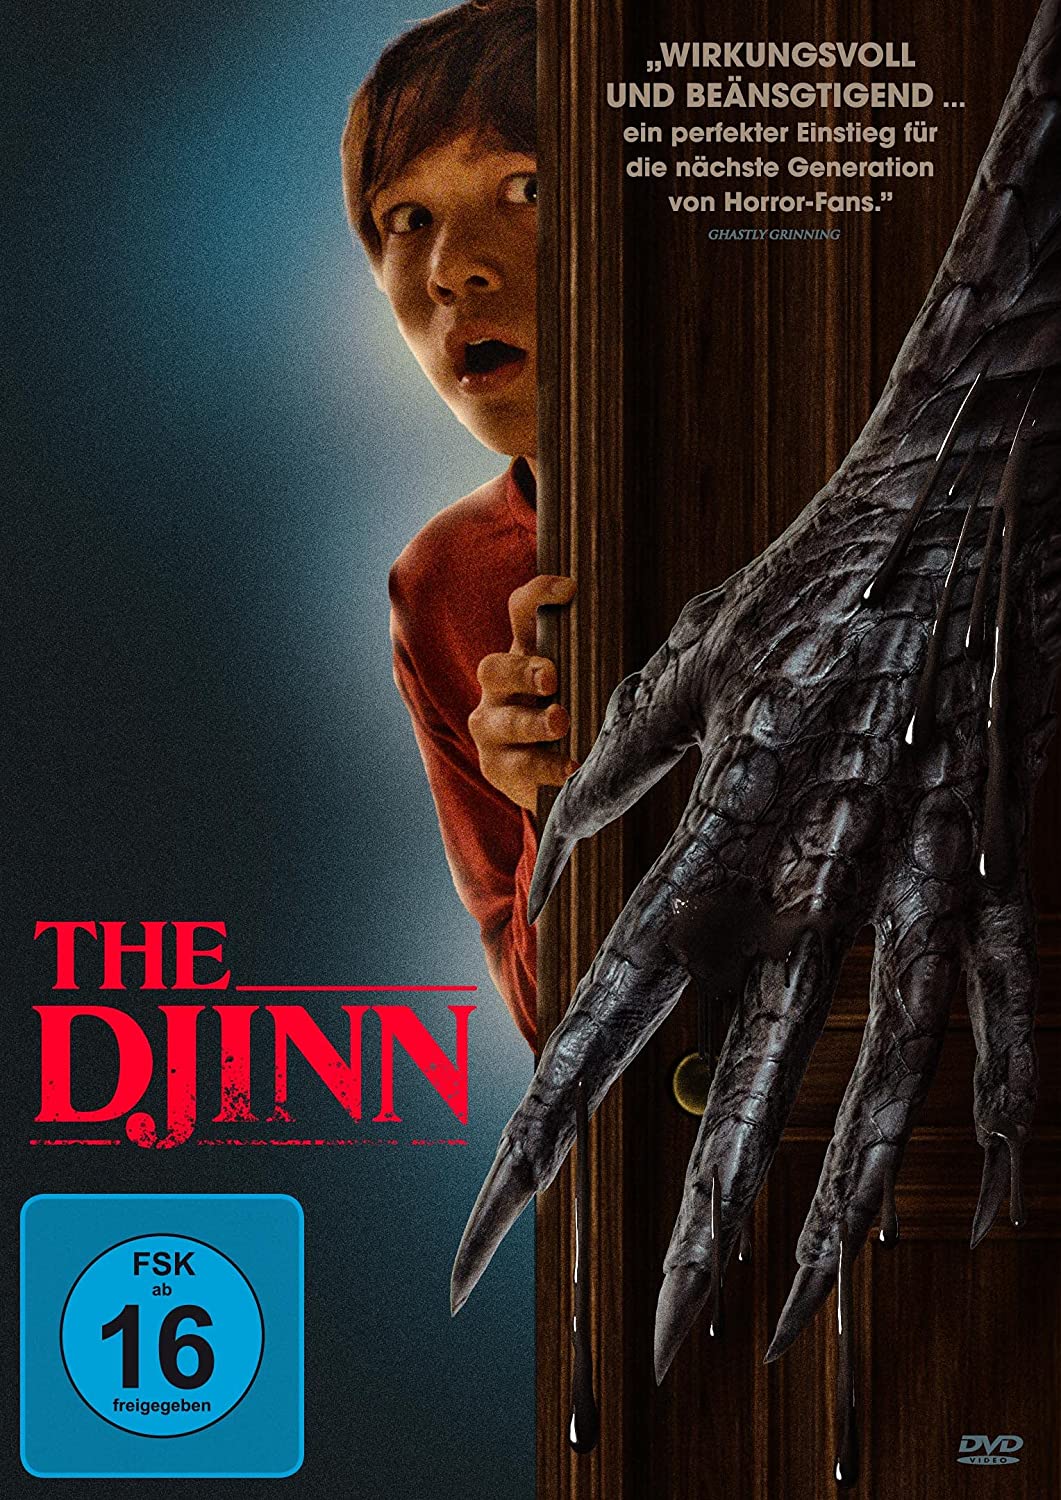 The Djinn – DVD Cover